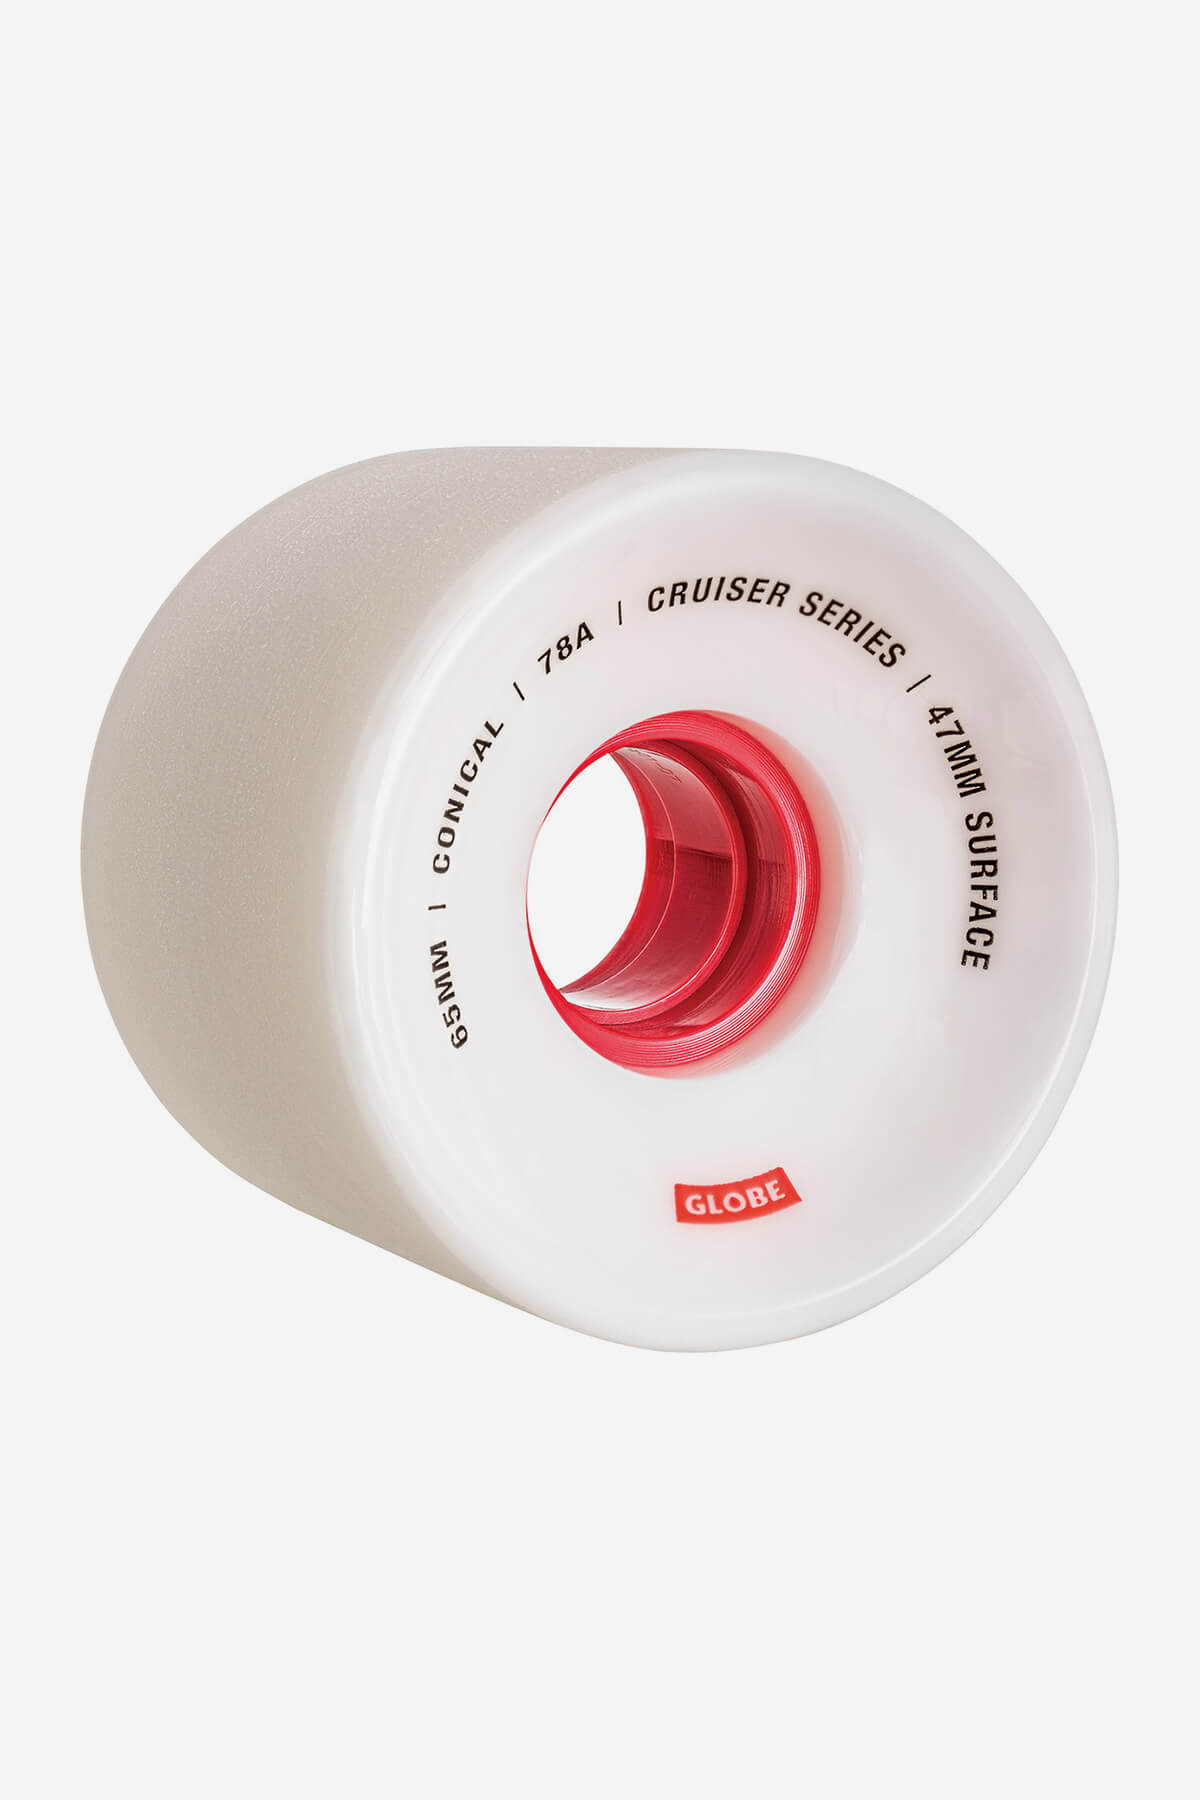 Globe - Conical Cruiser Skateboard Wheel 65Mm - White/Red